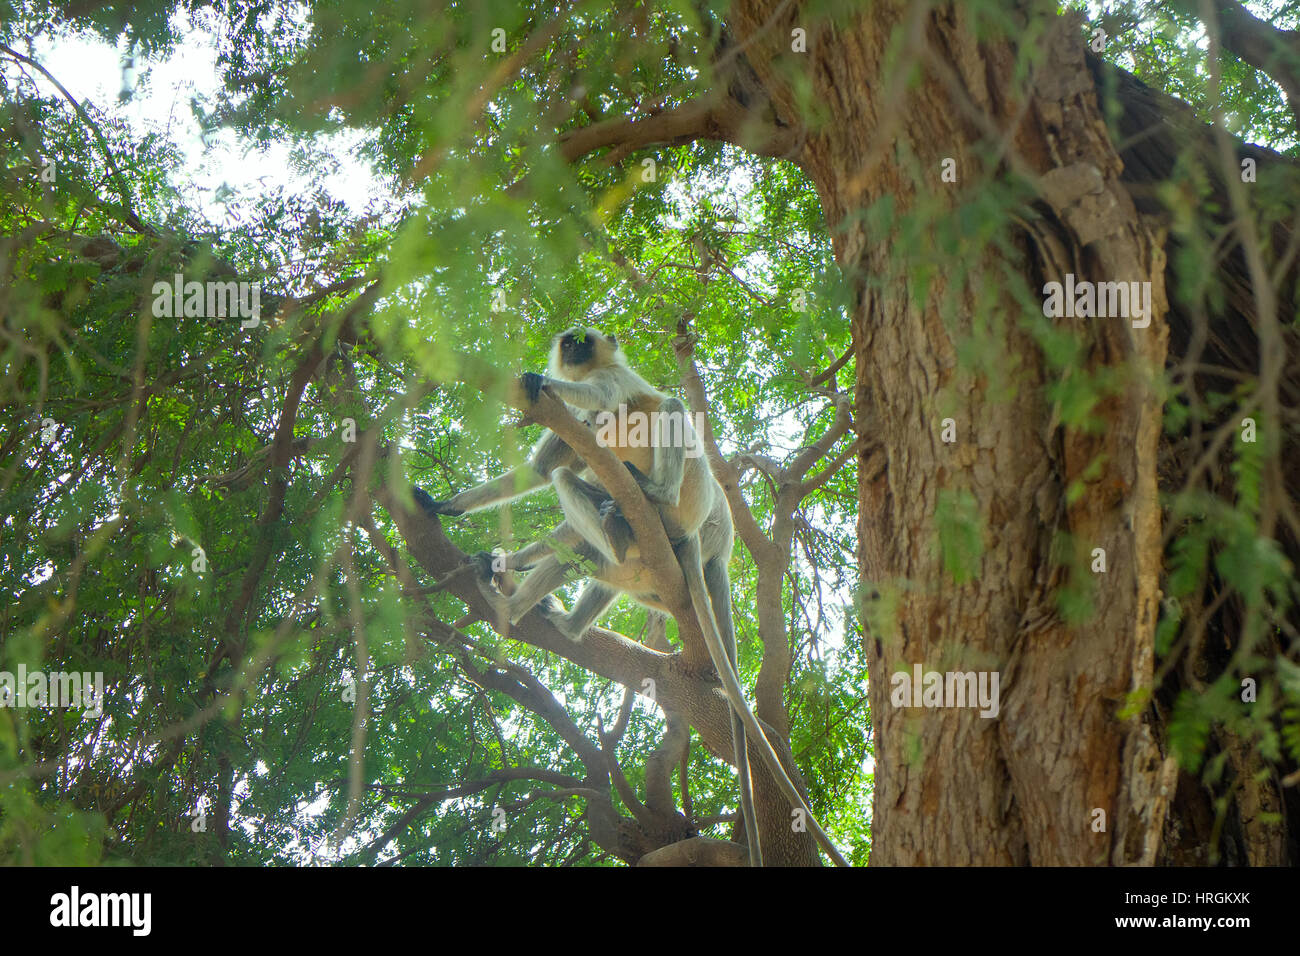 Flying soldiers of monkey God Hanuman 1. Bunch of monkeys (entellus langur, hanuman langur, Presbytis entellus) got the branchy tree Stock Photo